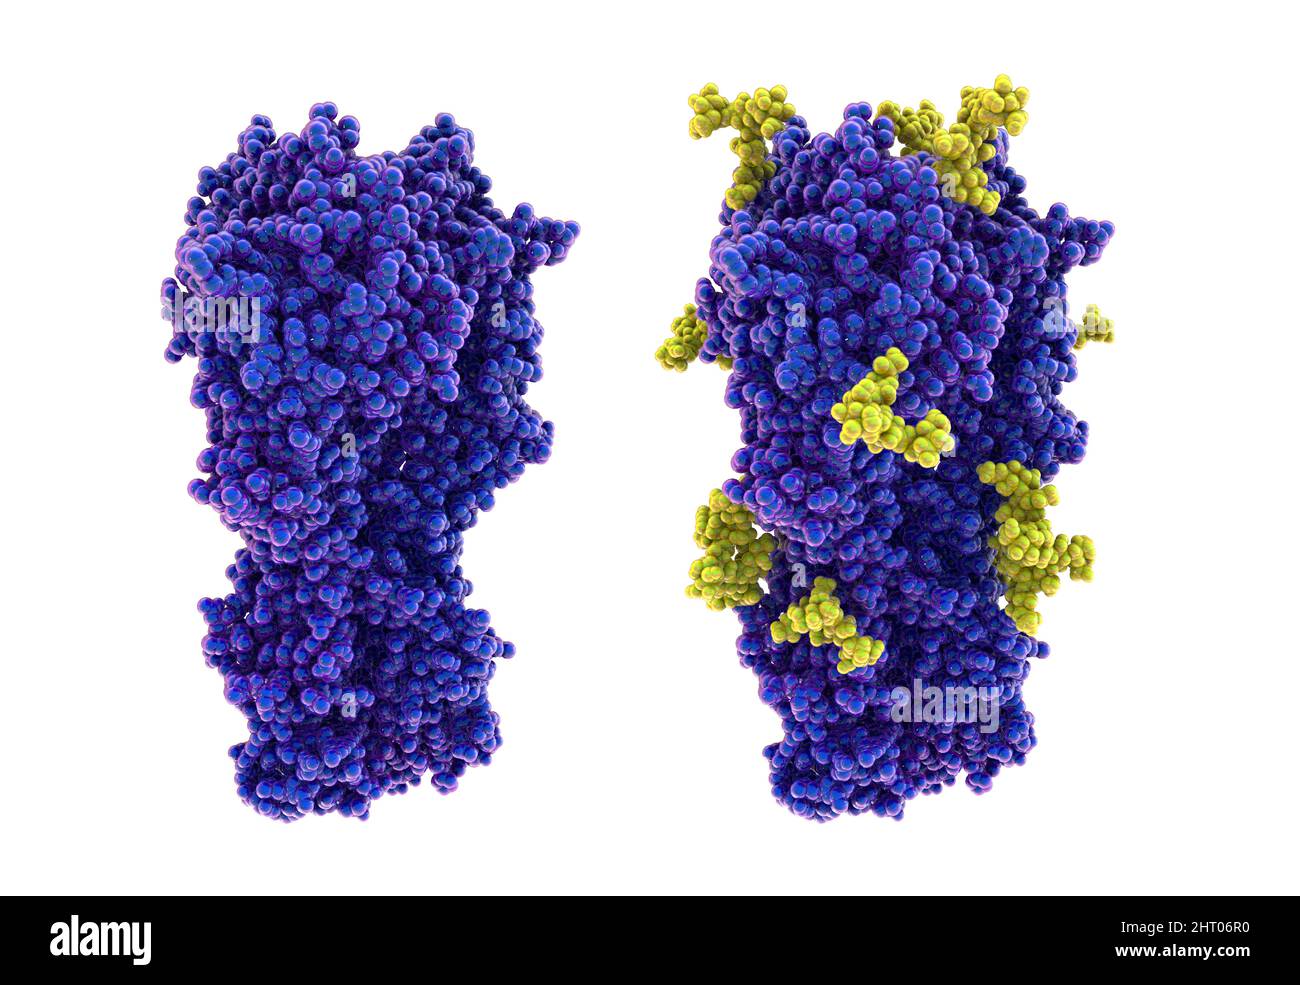 Haemagglutinin from H3N2 1968 influenza virus, illustration Stock Photo